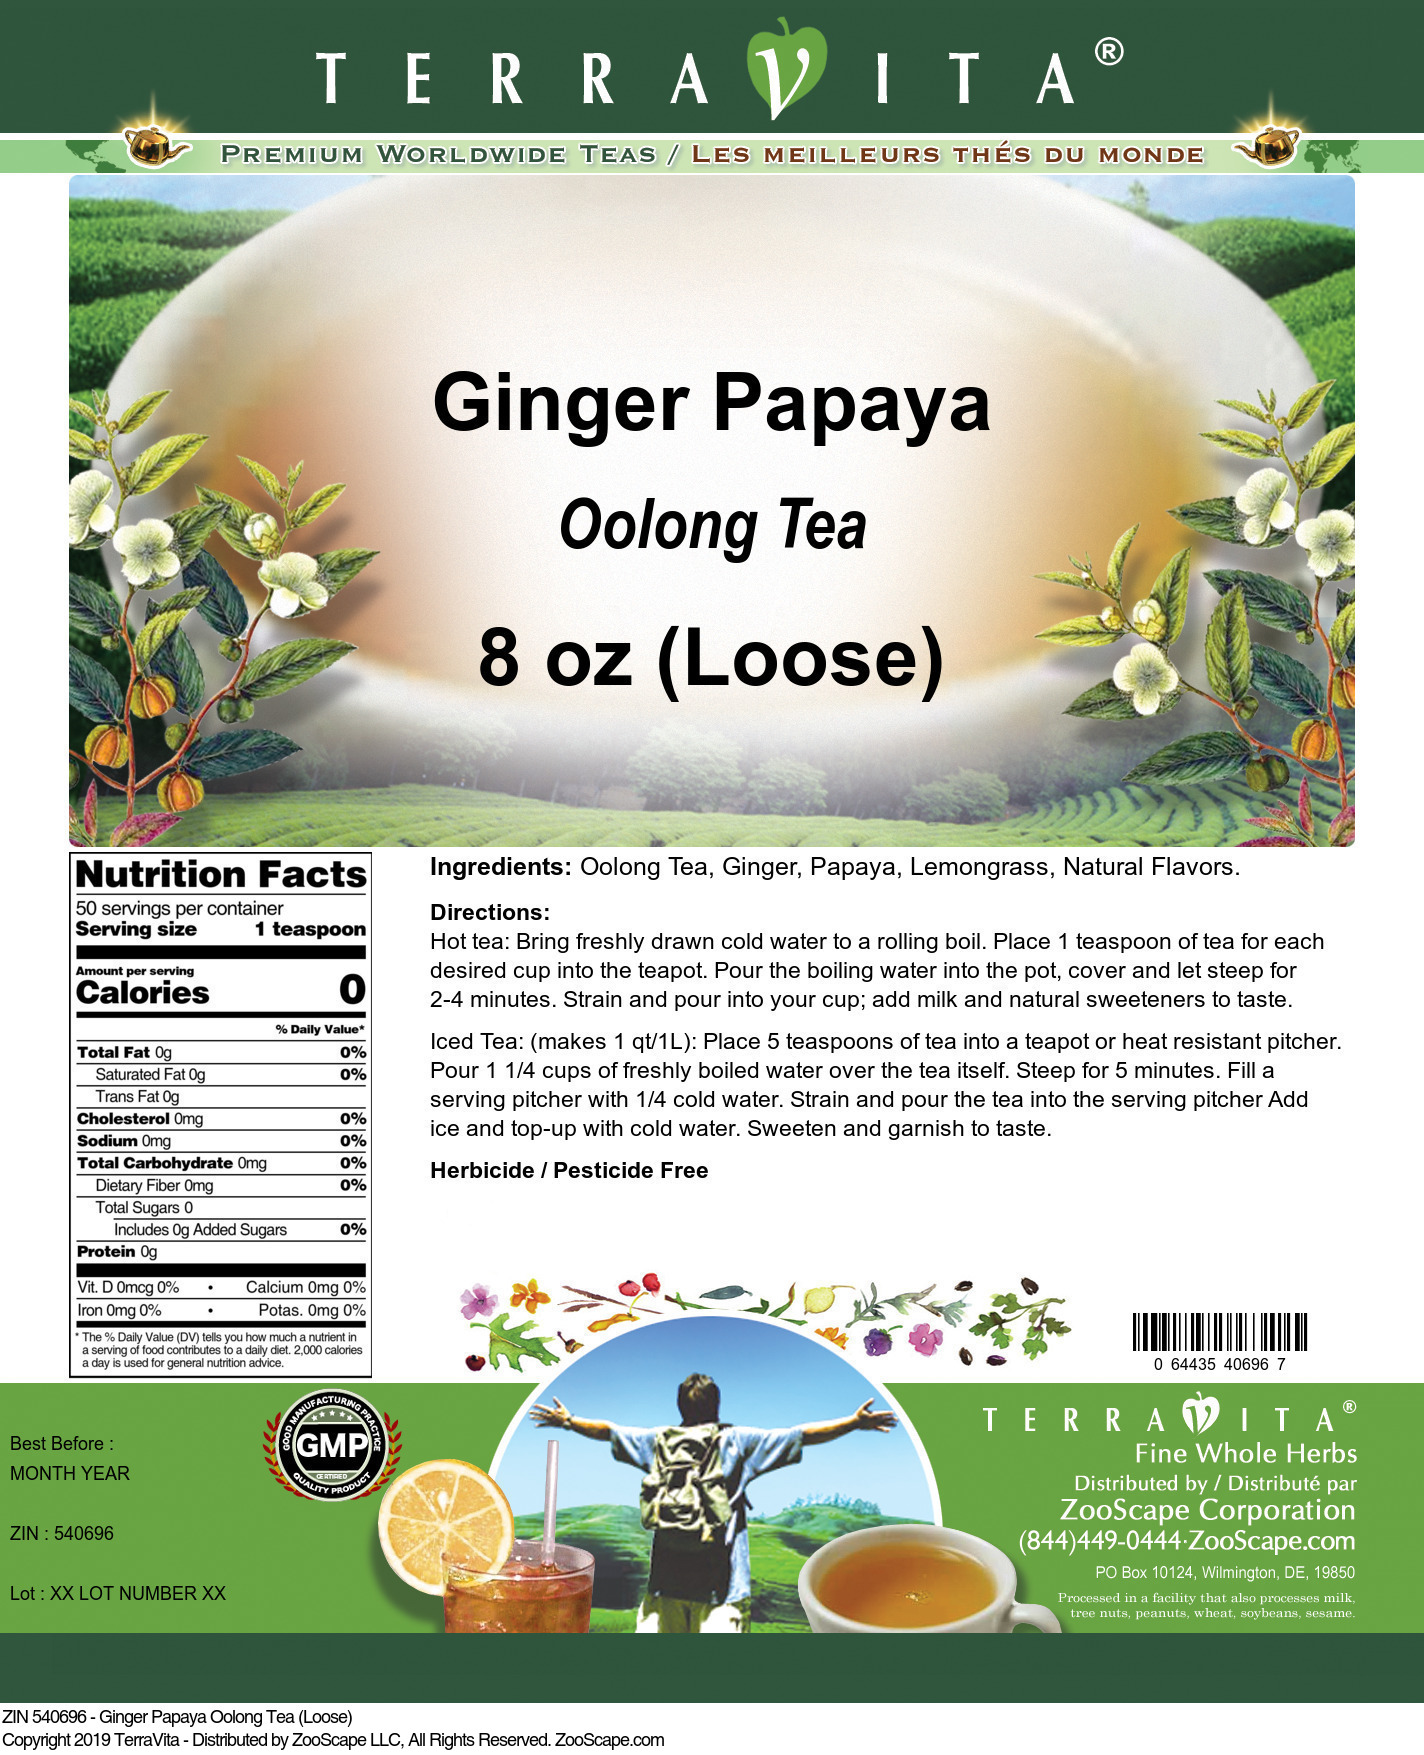 Ginger Papaya Oolong Tea (Loose) - Label